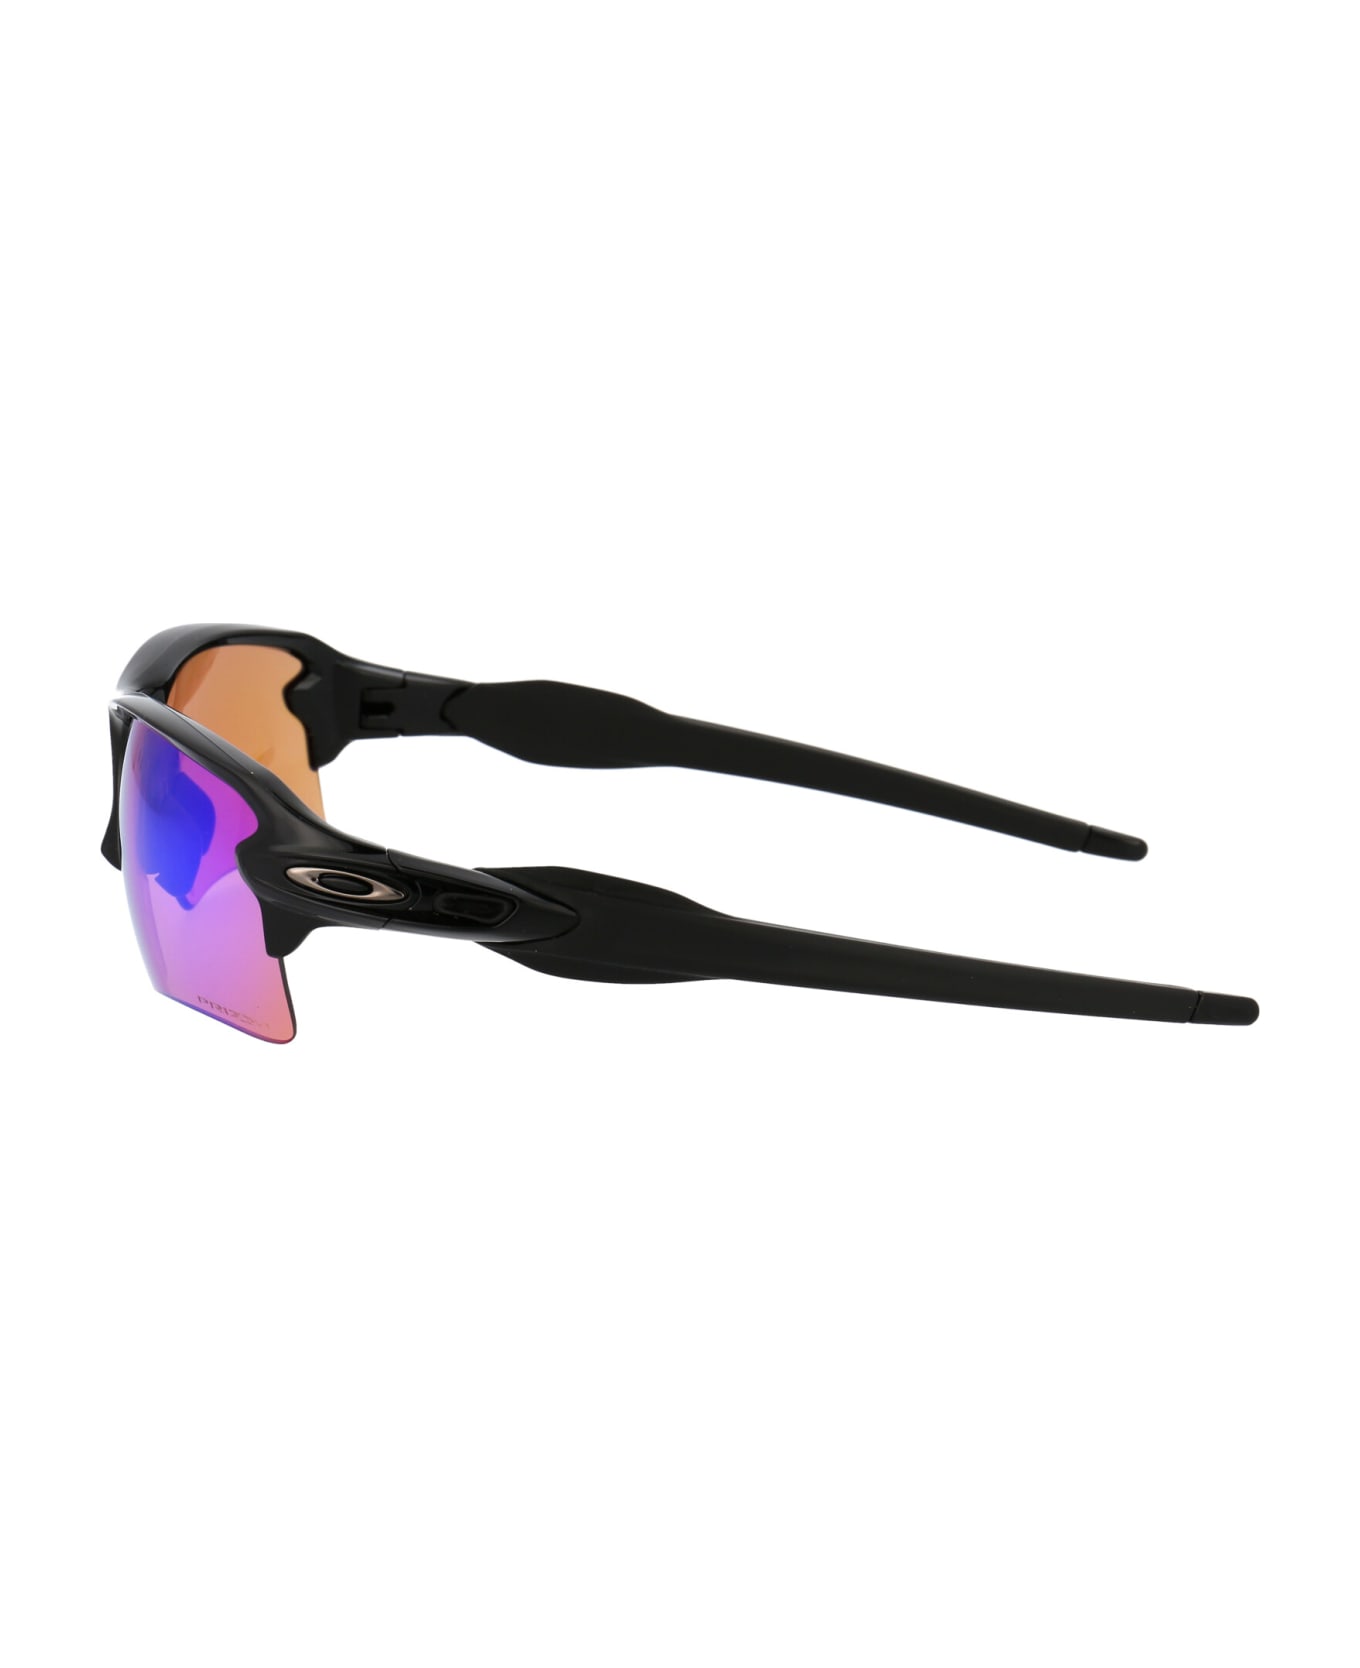 Oakley Flak 2.0 Xl Sunglasses - 918805 POLISHED BLACK